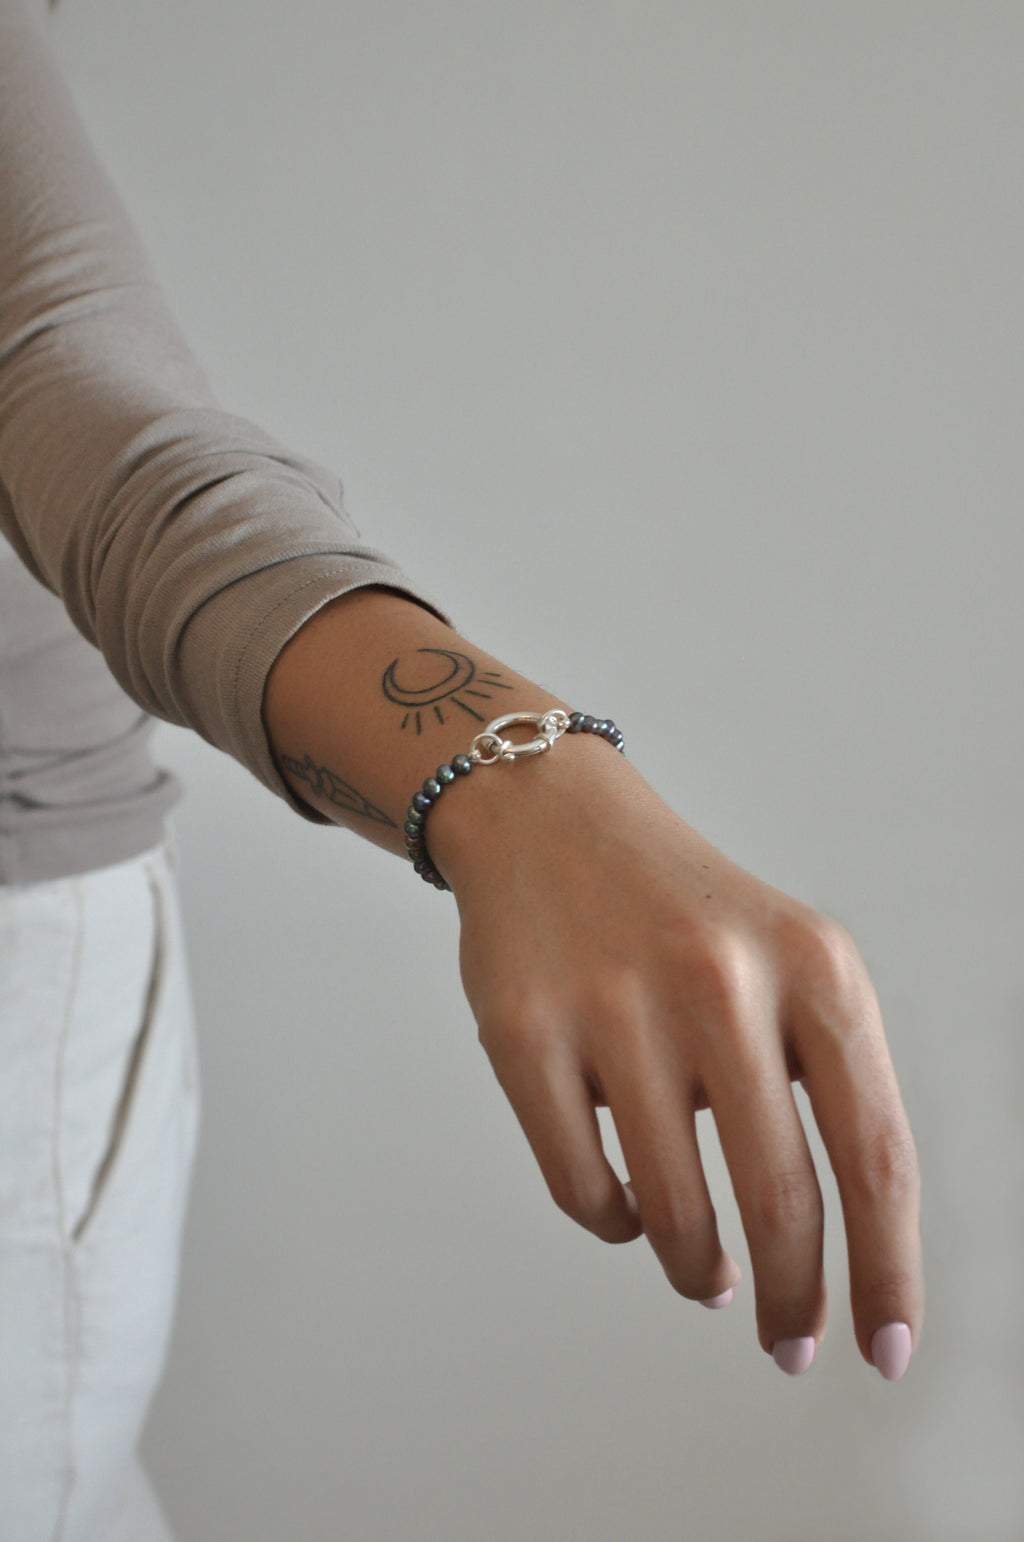 AQUA PEARL bracelet – LUVATON JEWELRY by Talia Luvaton